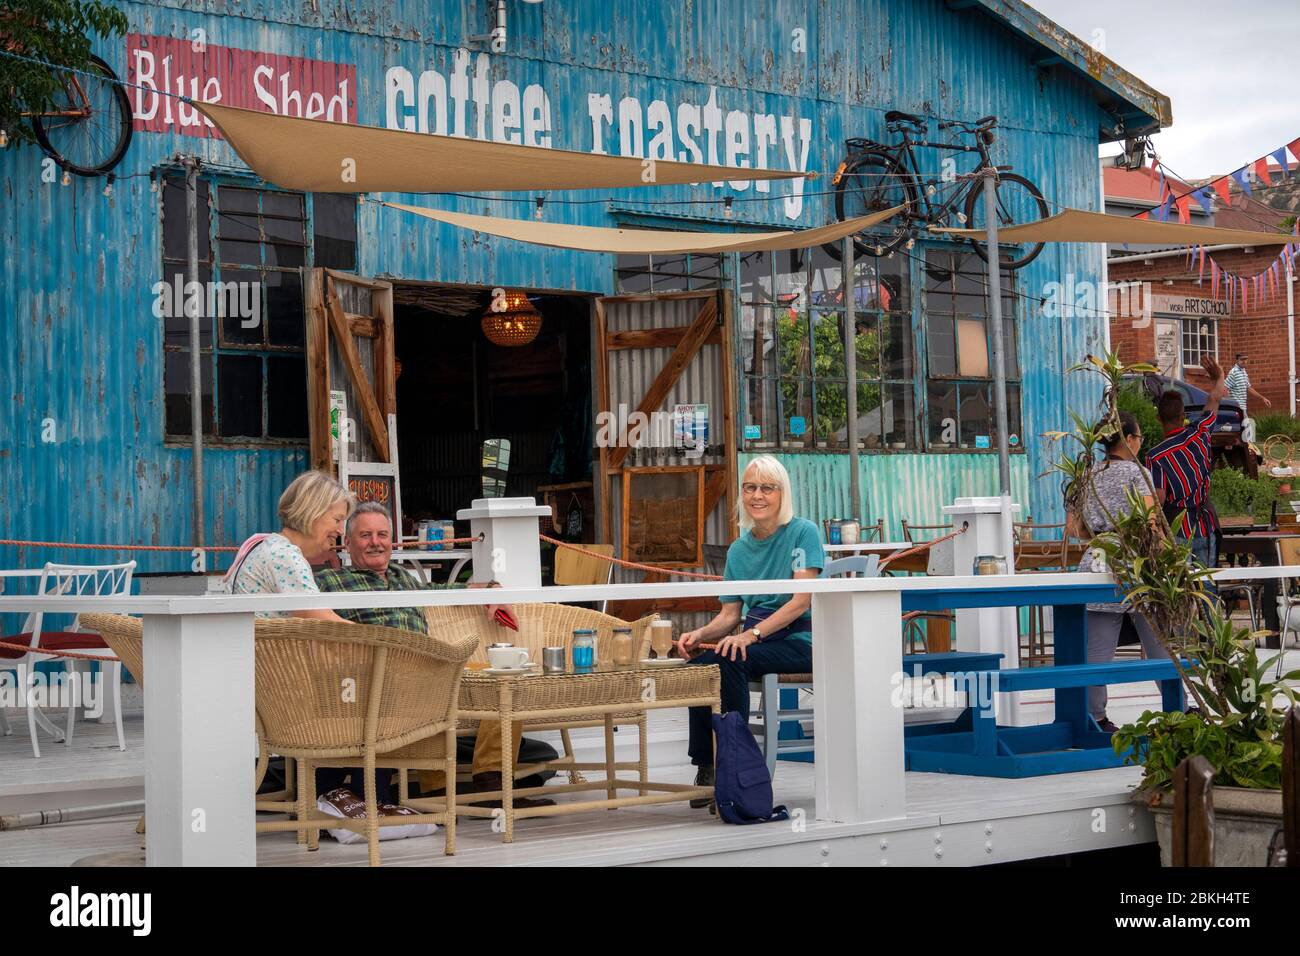 Sud Africa, Western Cape, Mossel Bay, Bland Street, Blue Shed Coffee Roestry, eccentrica caffetteria in cortile spazzatura Foto Stock